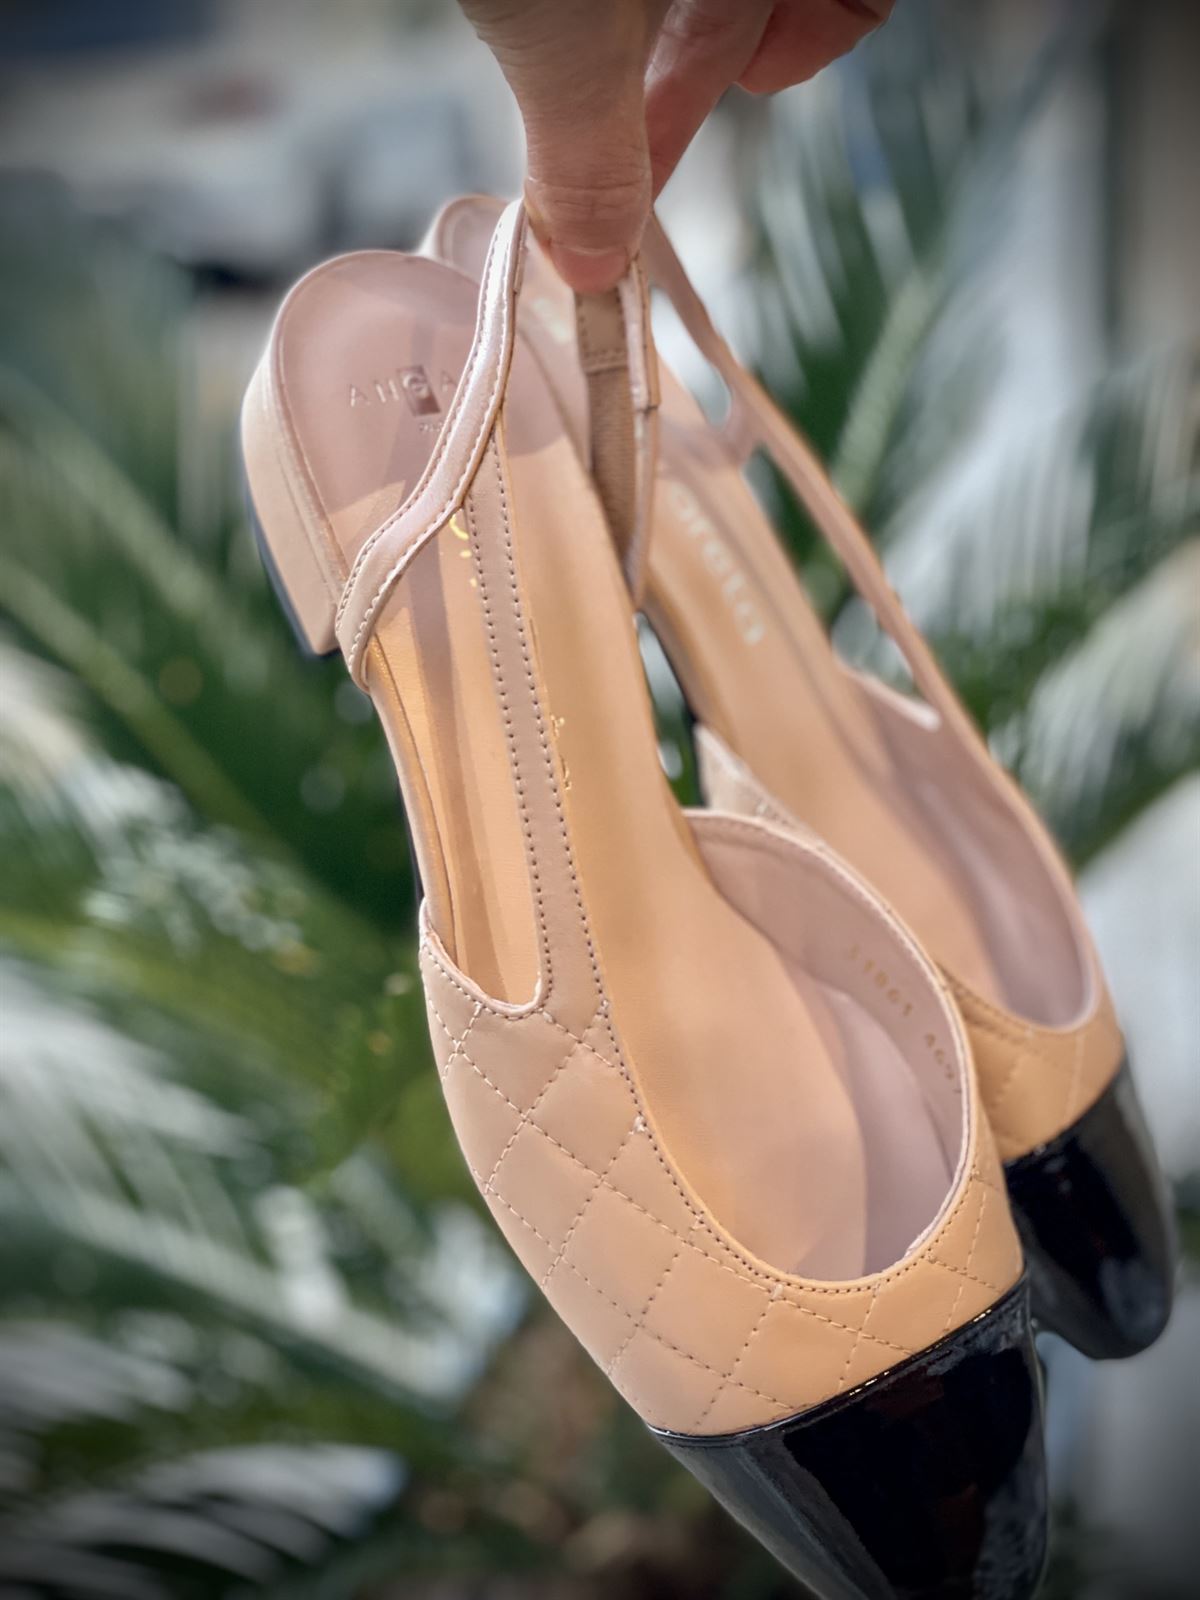 Zapatos Angari bailarinas bicolor puntera charol - Imagen 5